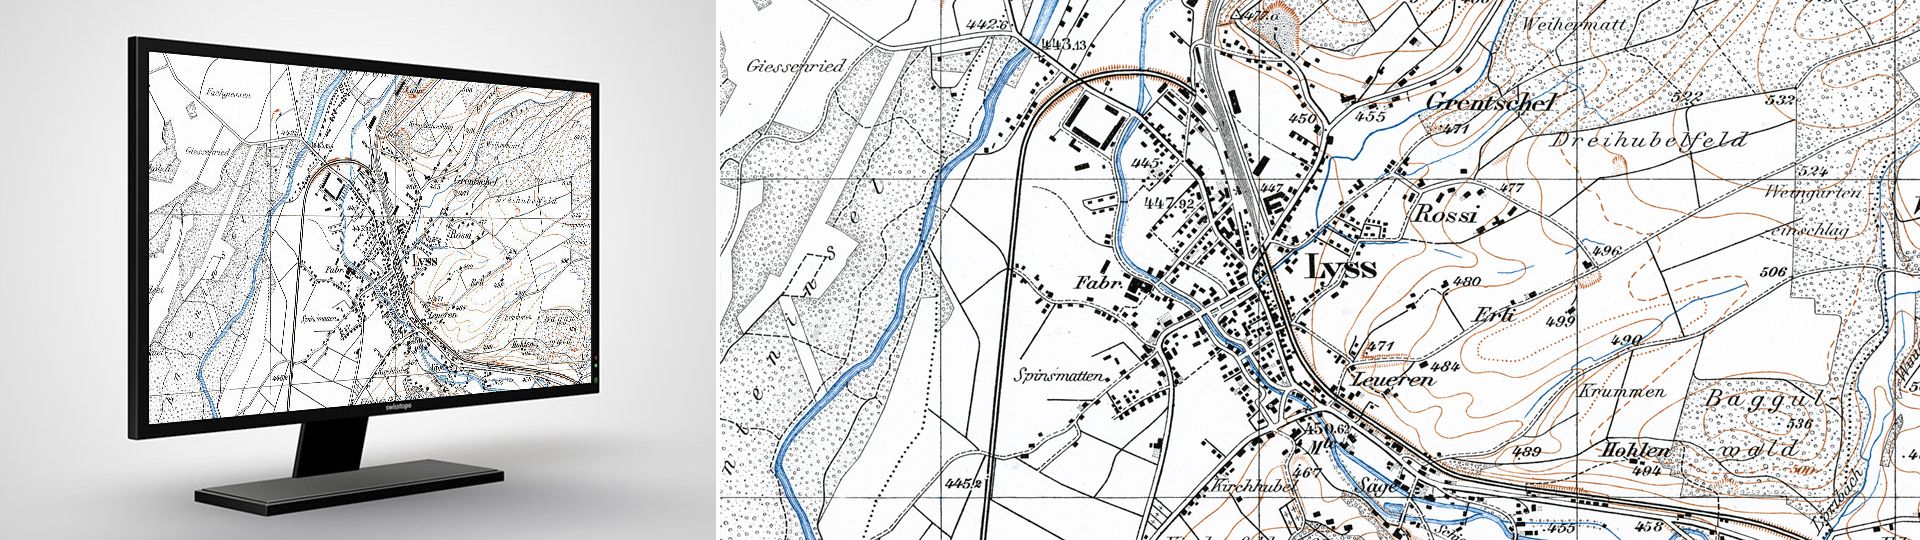 Siegfried Map 1:25,000: georeferenced Siegfried Map 1:25,000